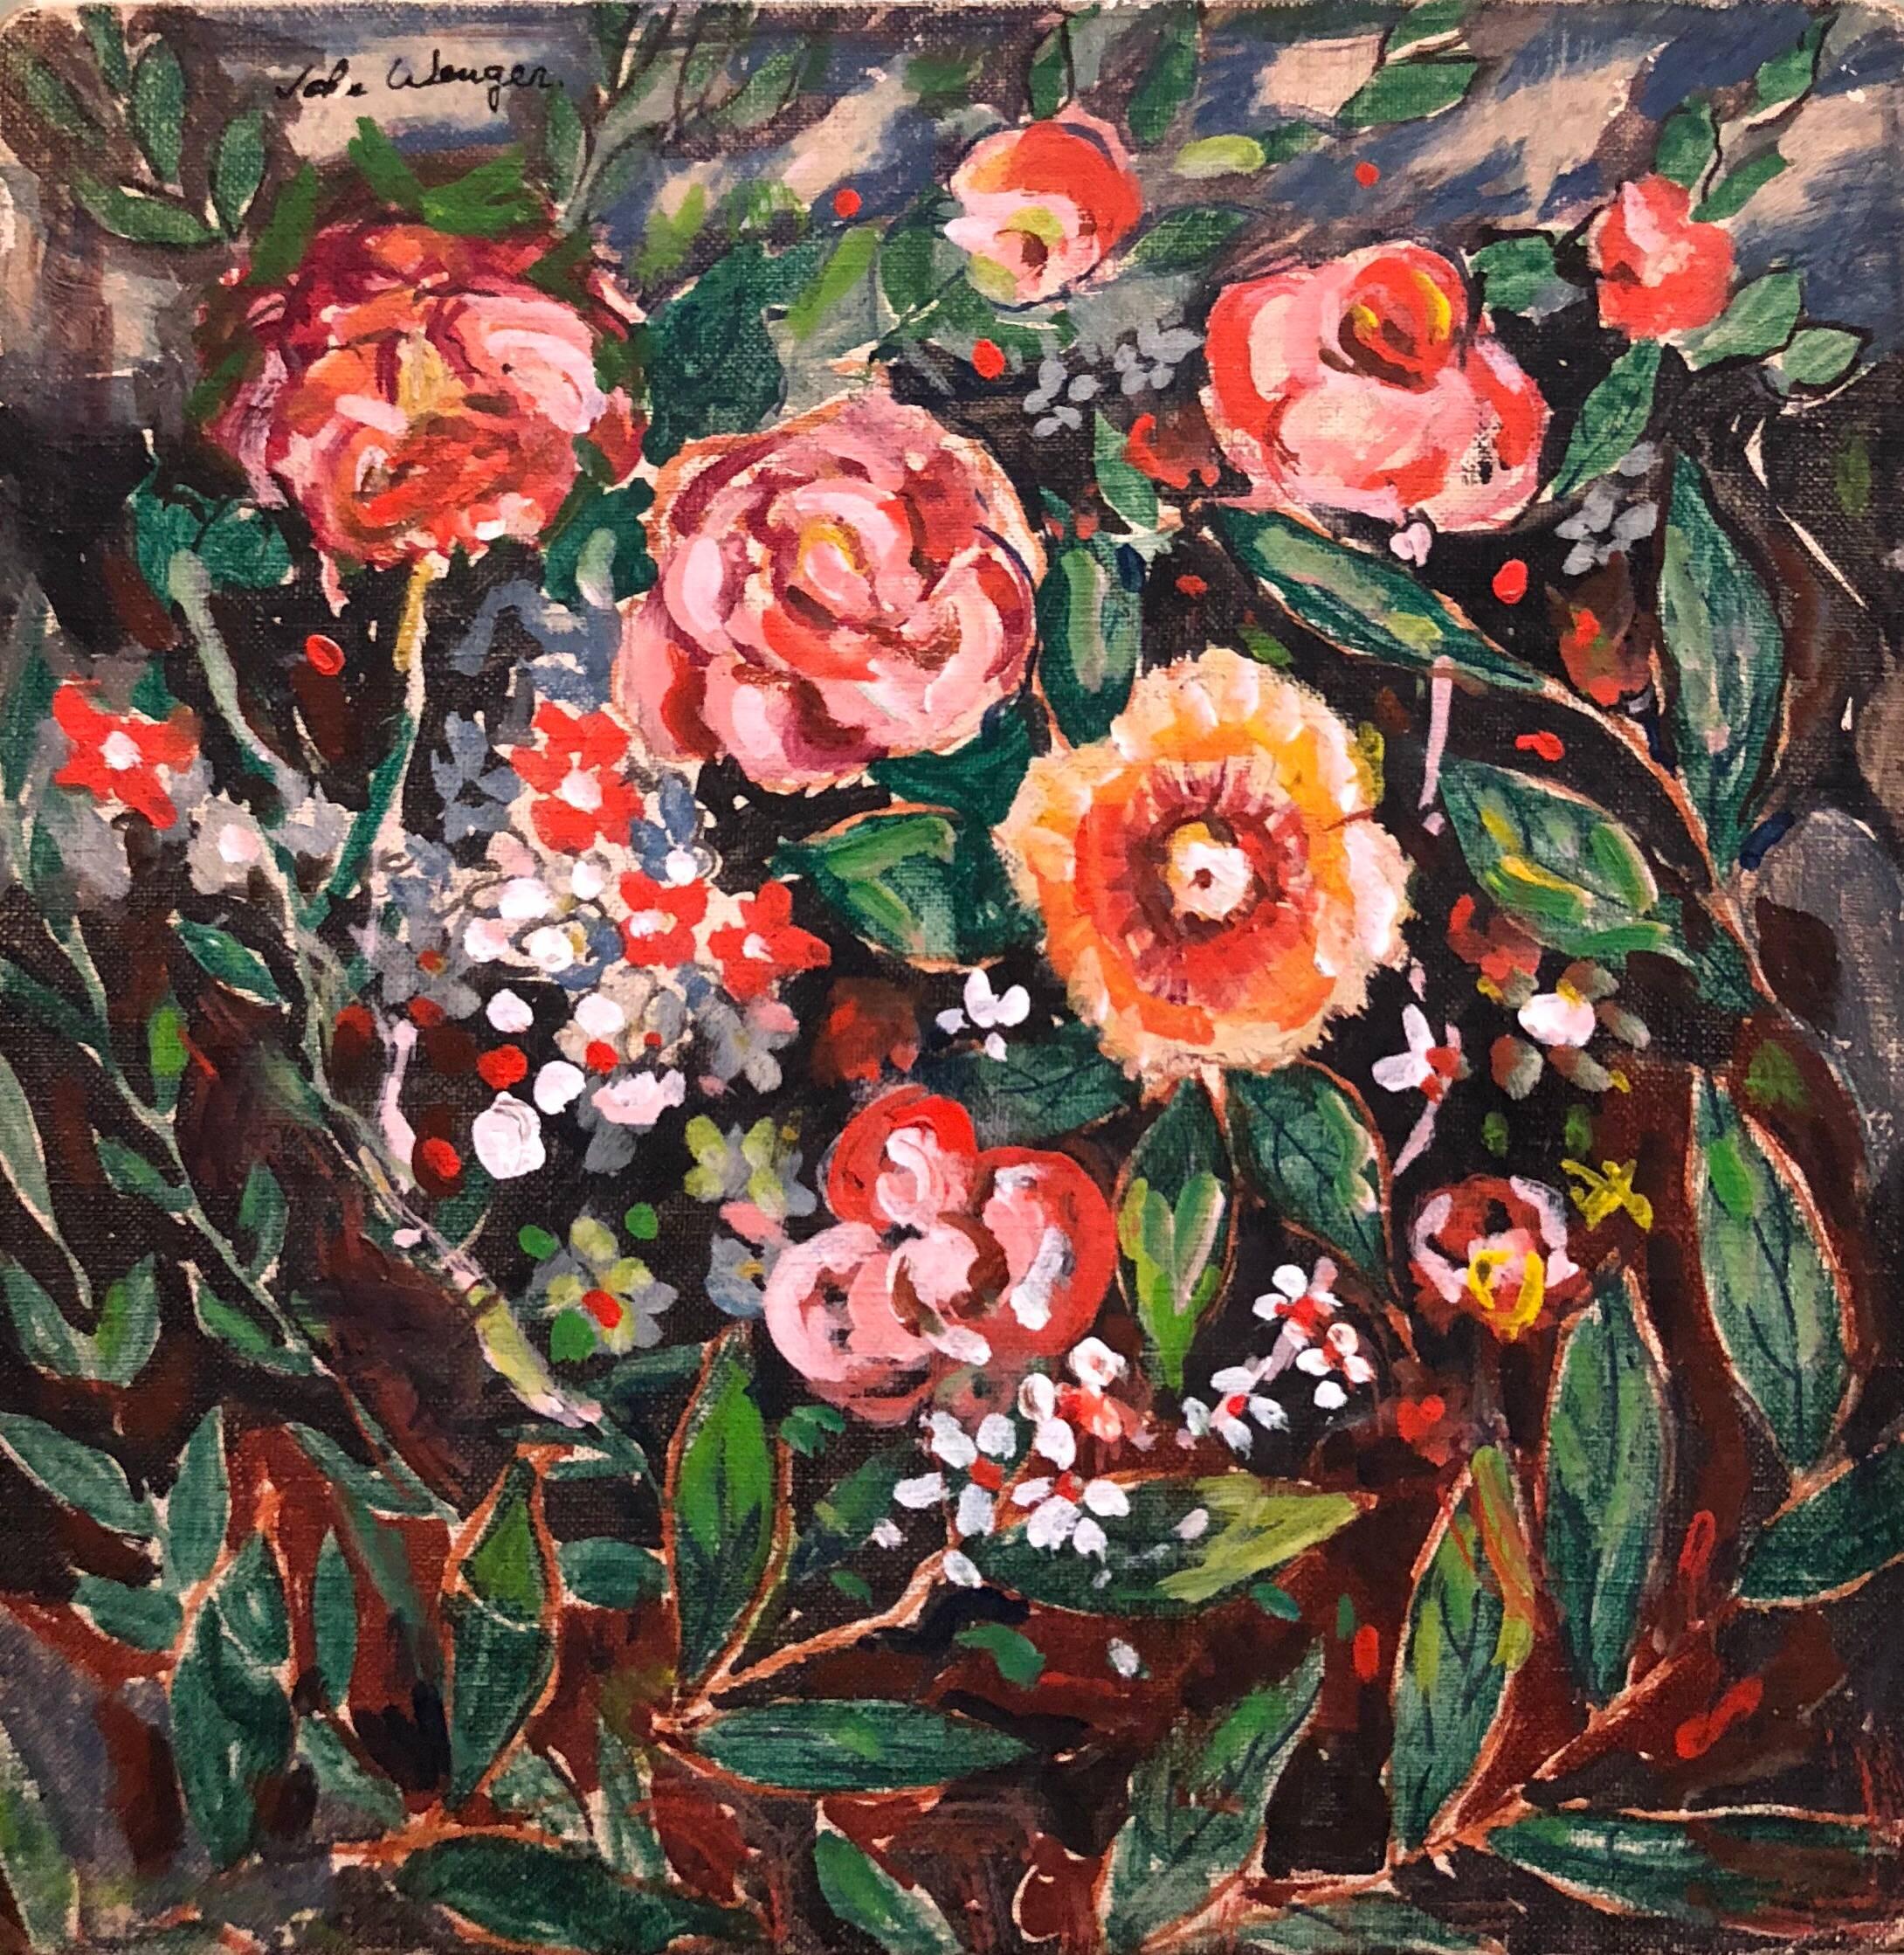 John Wenger Landscape Painting - Wild Flowers Vibrant Colorful Modernist Oil Painting